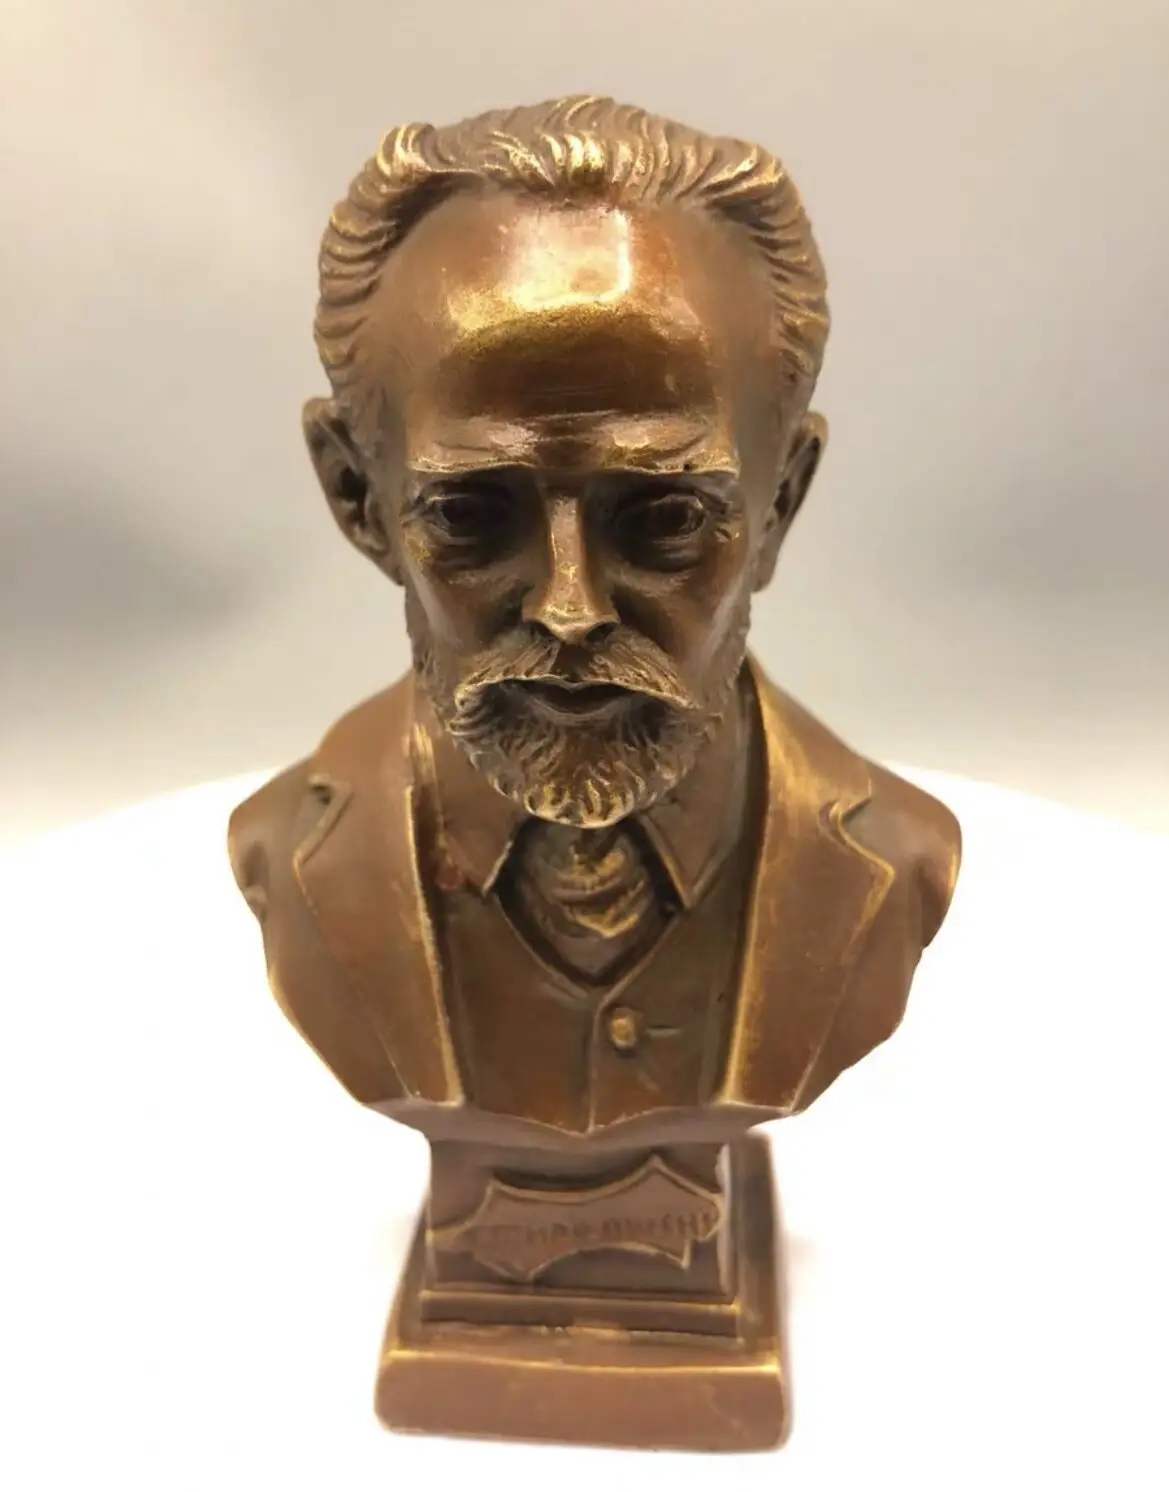 art-collection-bronze-statue-handmade-bust-sculpturesworld-famous-figures-peter-ilyich-tchaikovsky-home-decorations-crafts